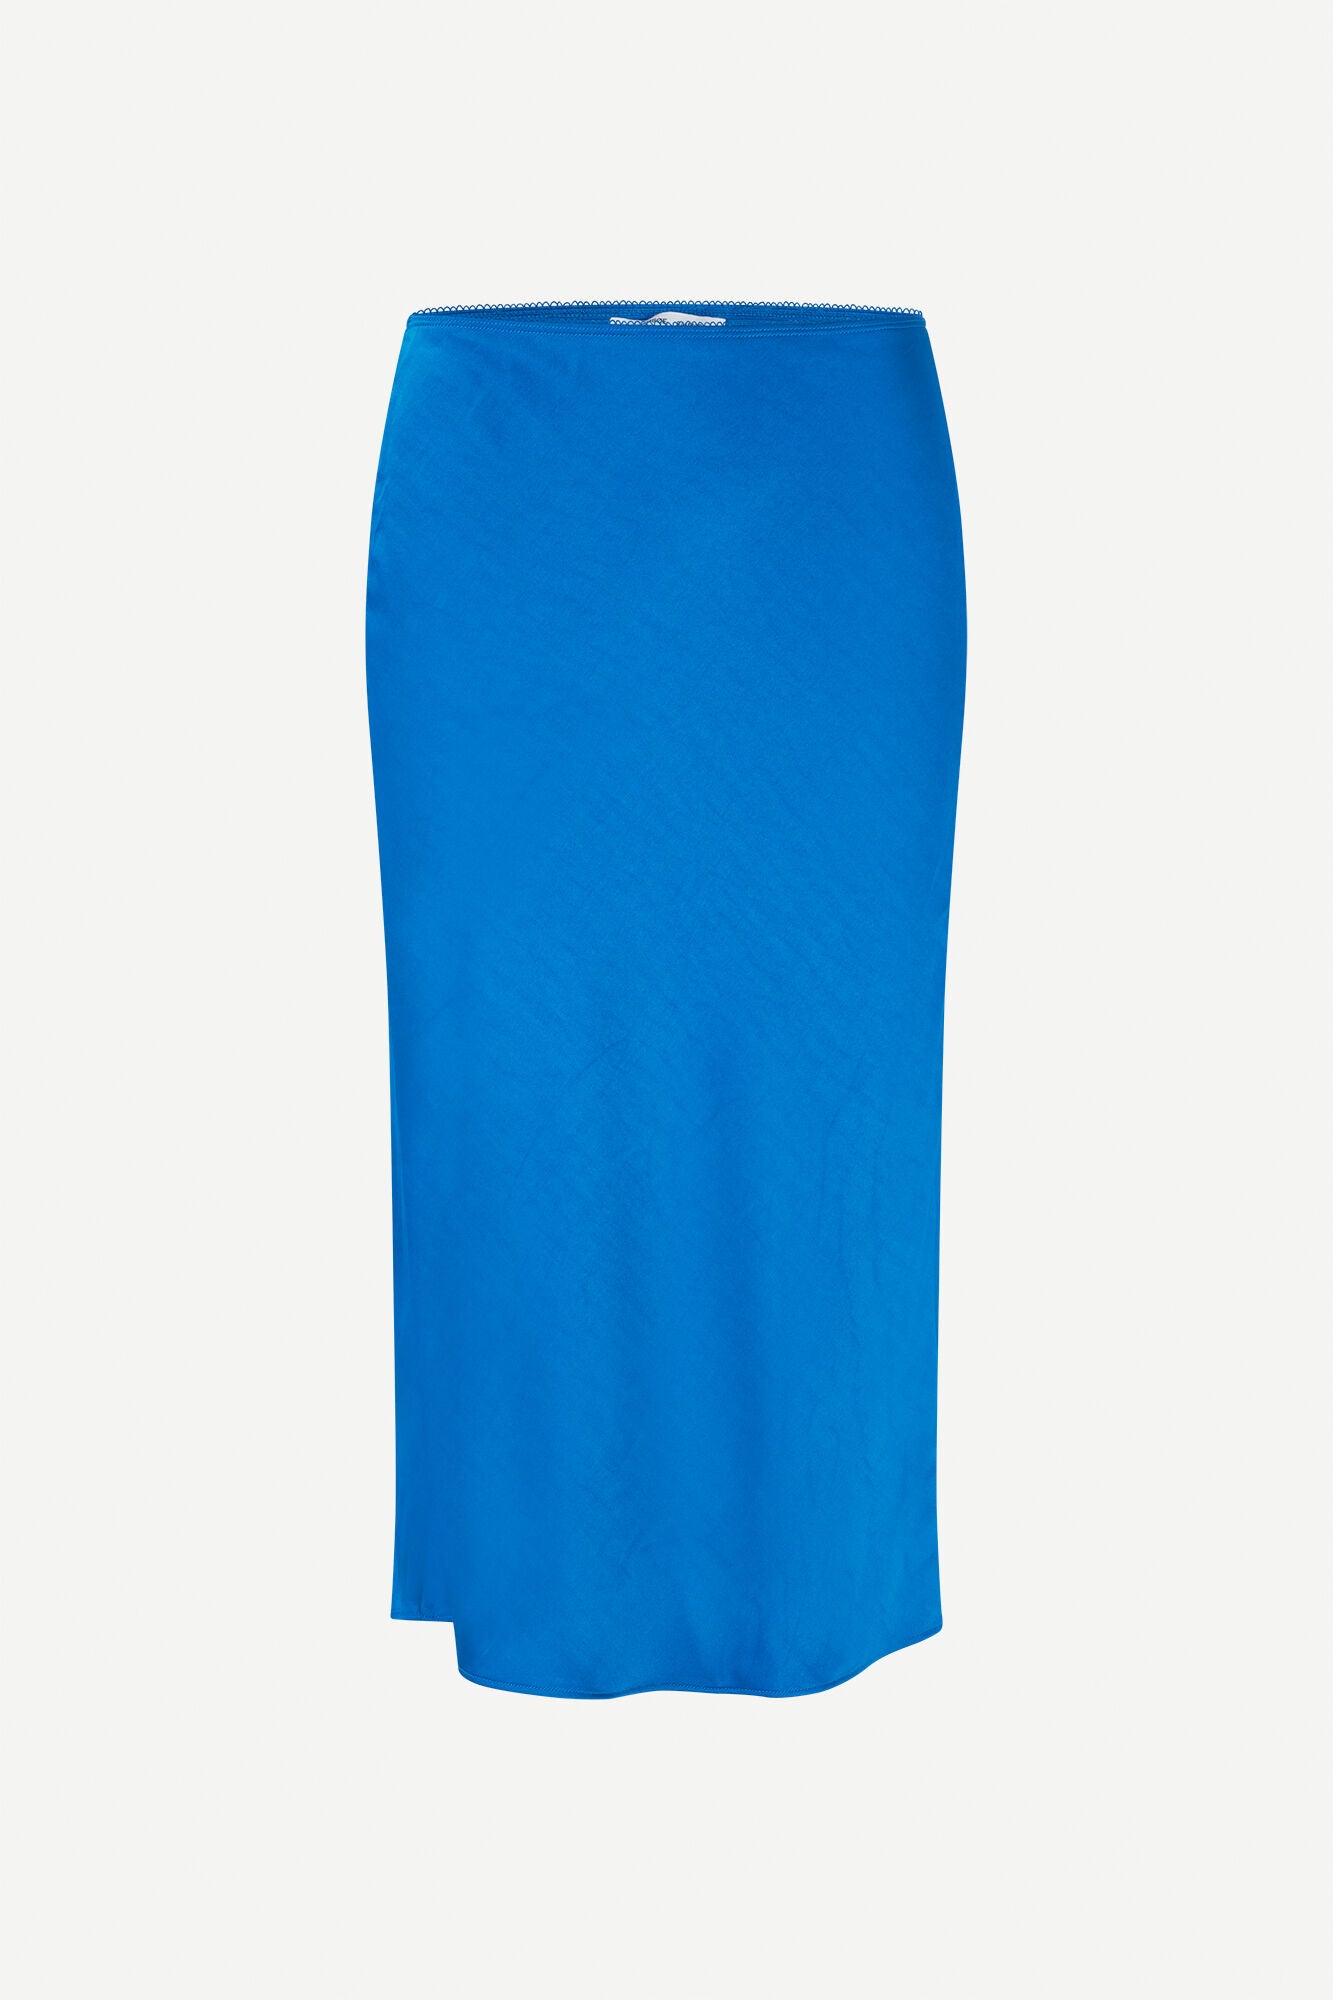 Silky skirt in bright blue